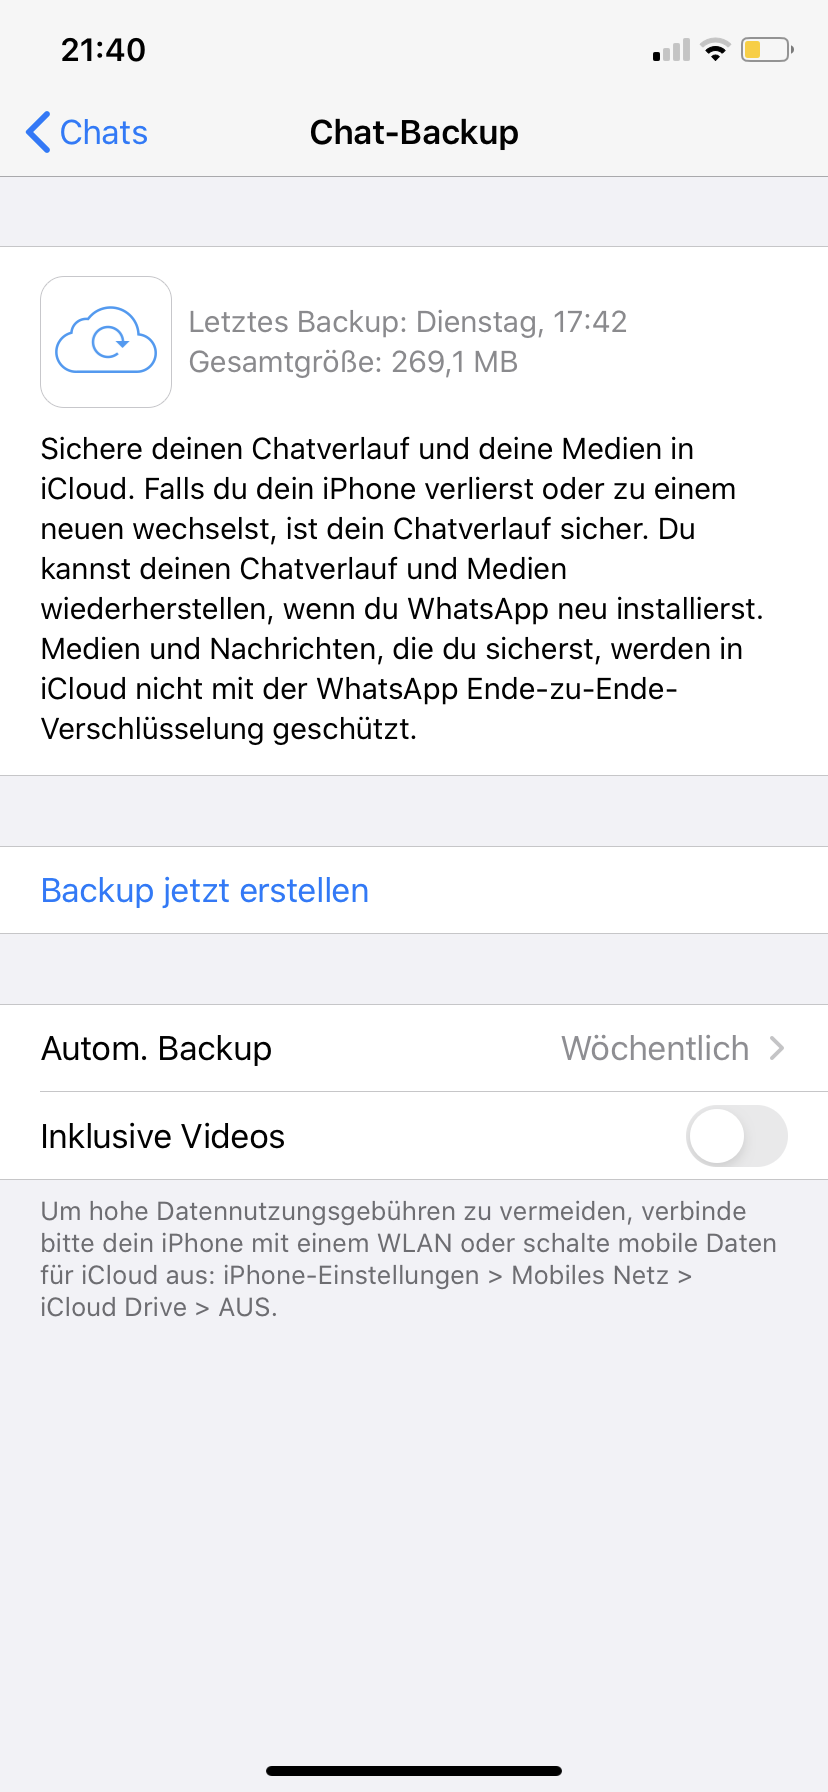  Screenshot: Chat-Backup Einstellungen bei WhatsApp (iOS)